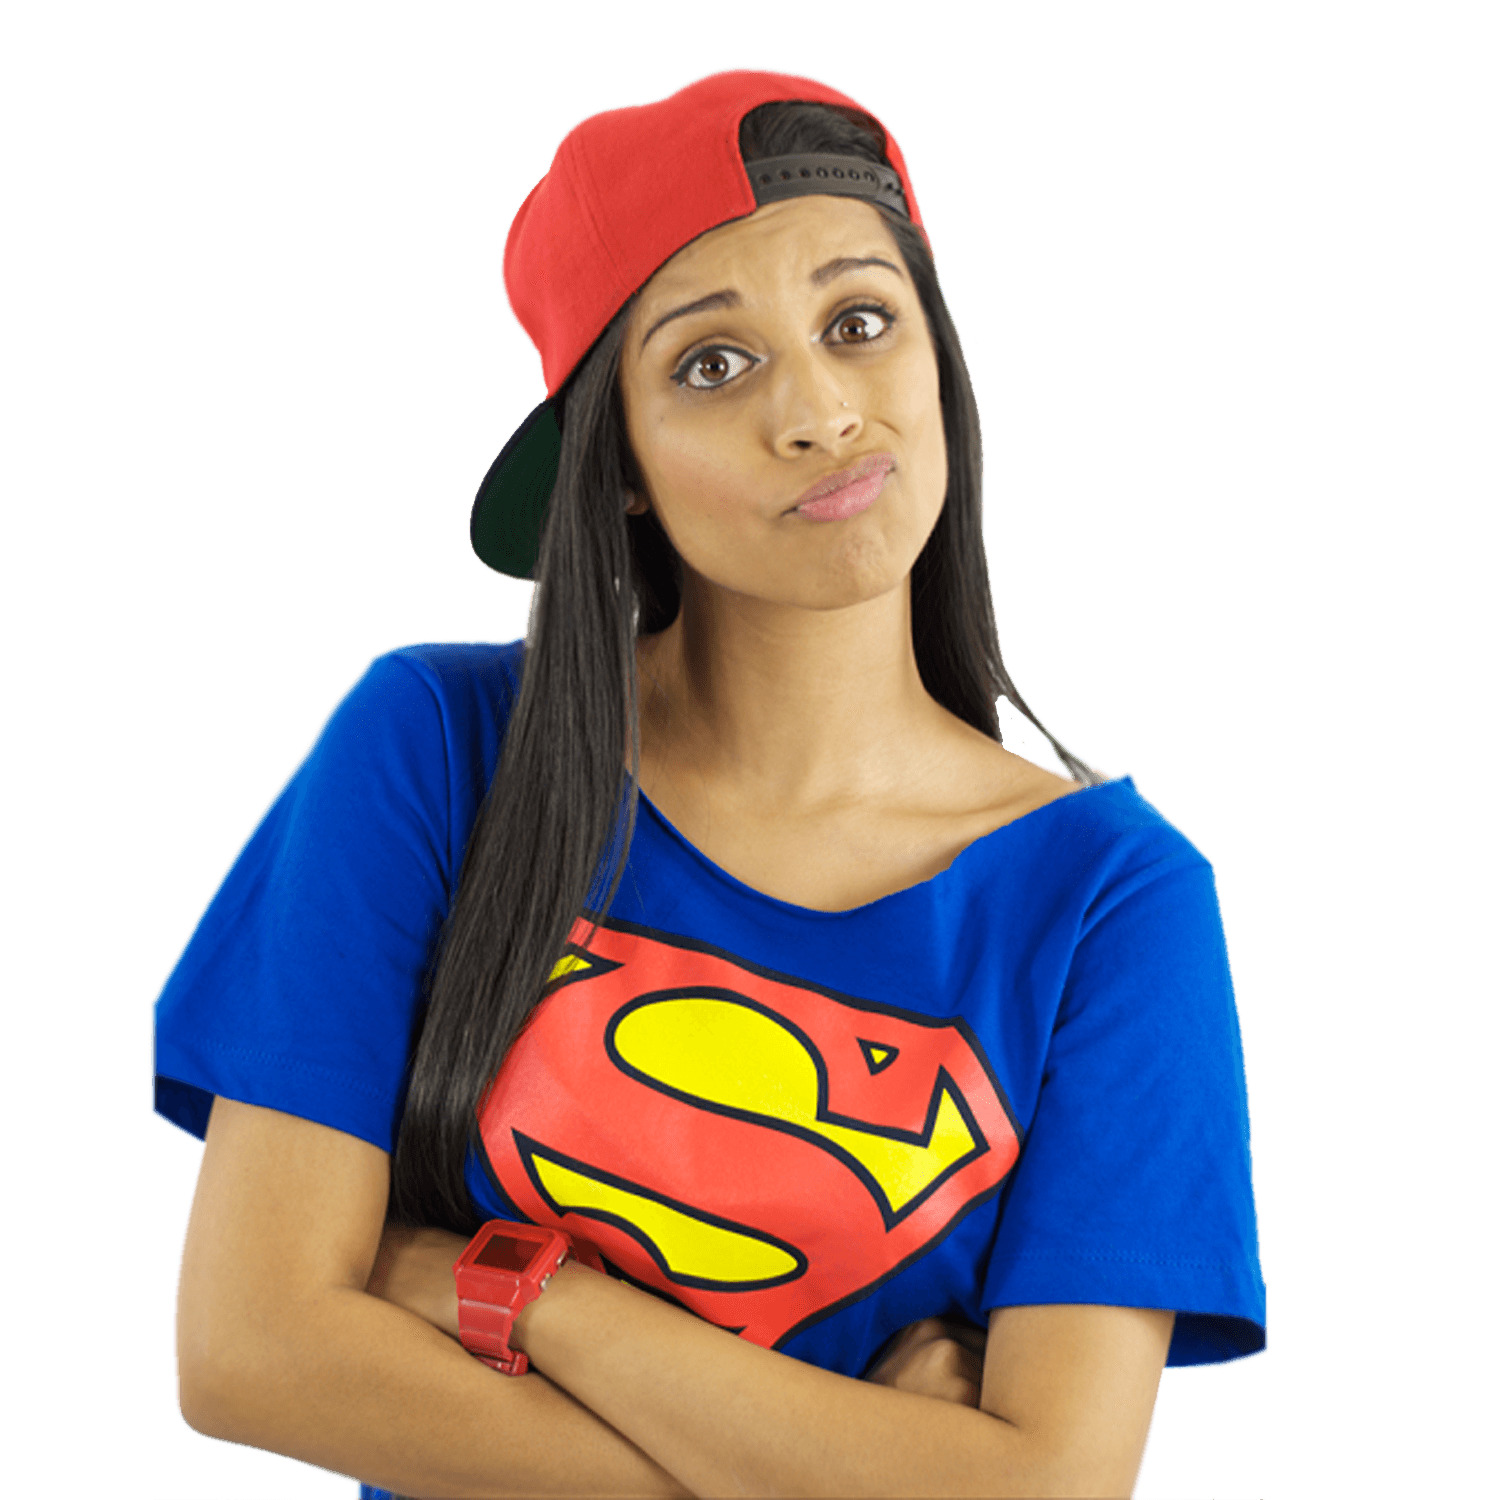 Lilly Singh IISuperwomanII Superwoman icons